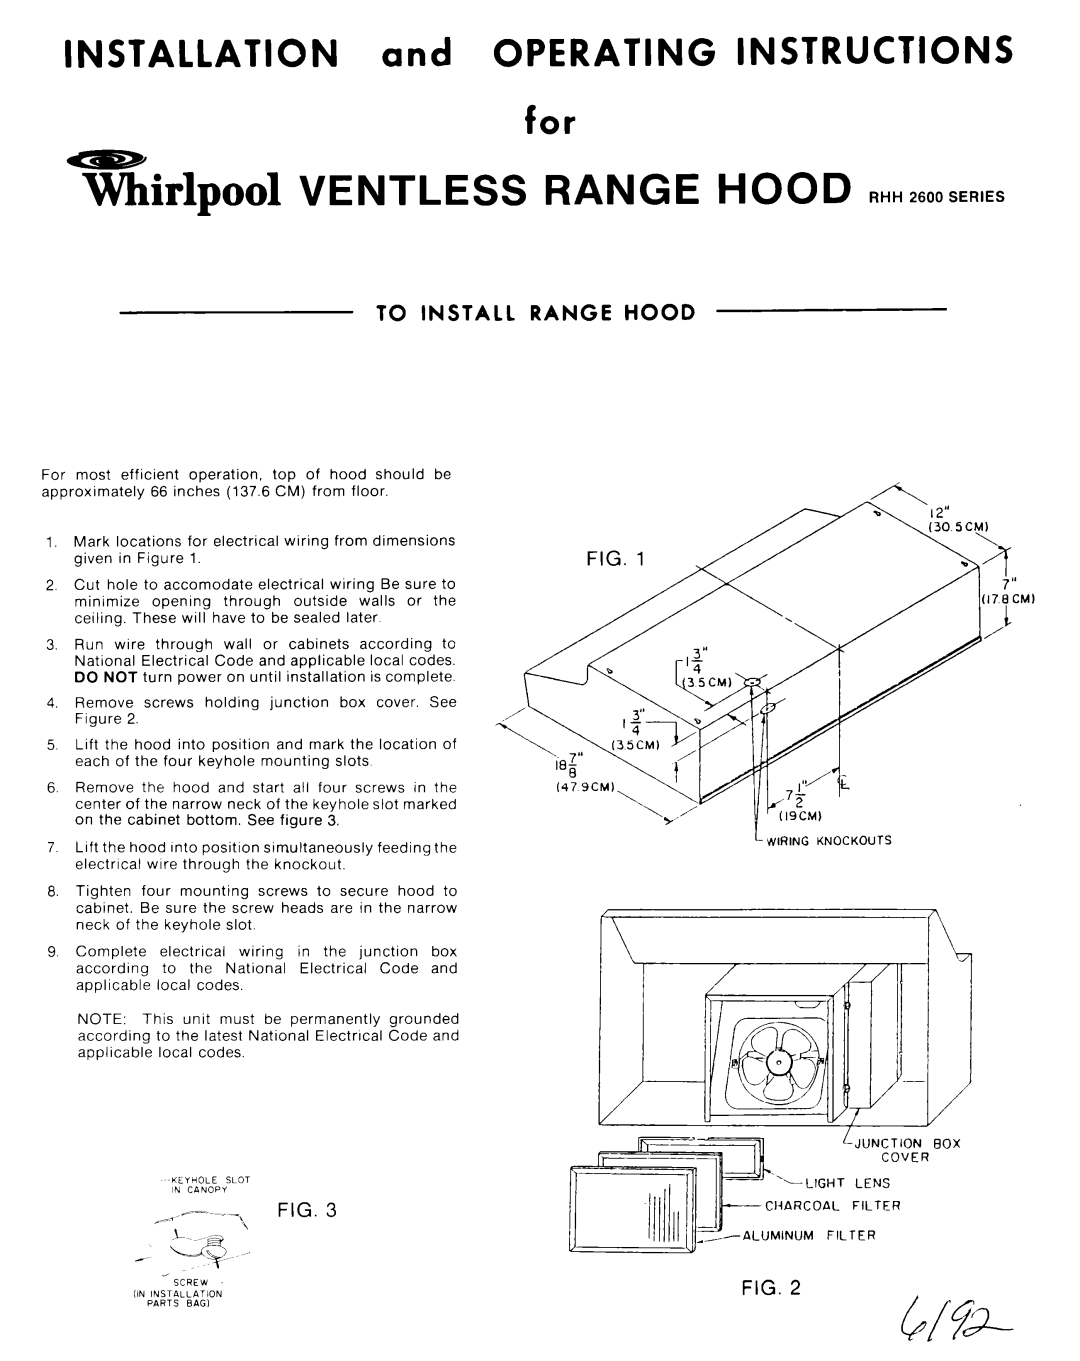 Whirlpool dimensions To Install Range Hood, Screw, whirlpool, Ventless, HOODRHH2600SERlES, INSTALLATION and OPERATING 